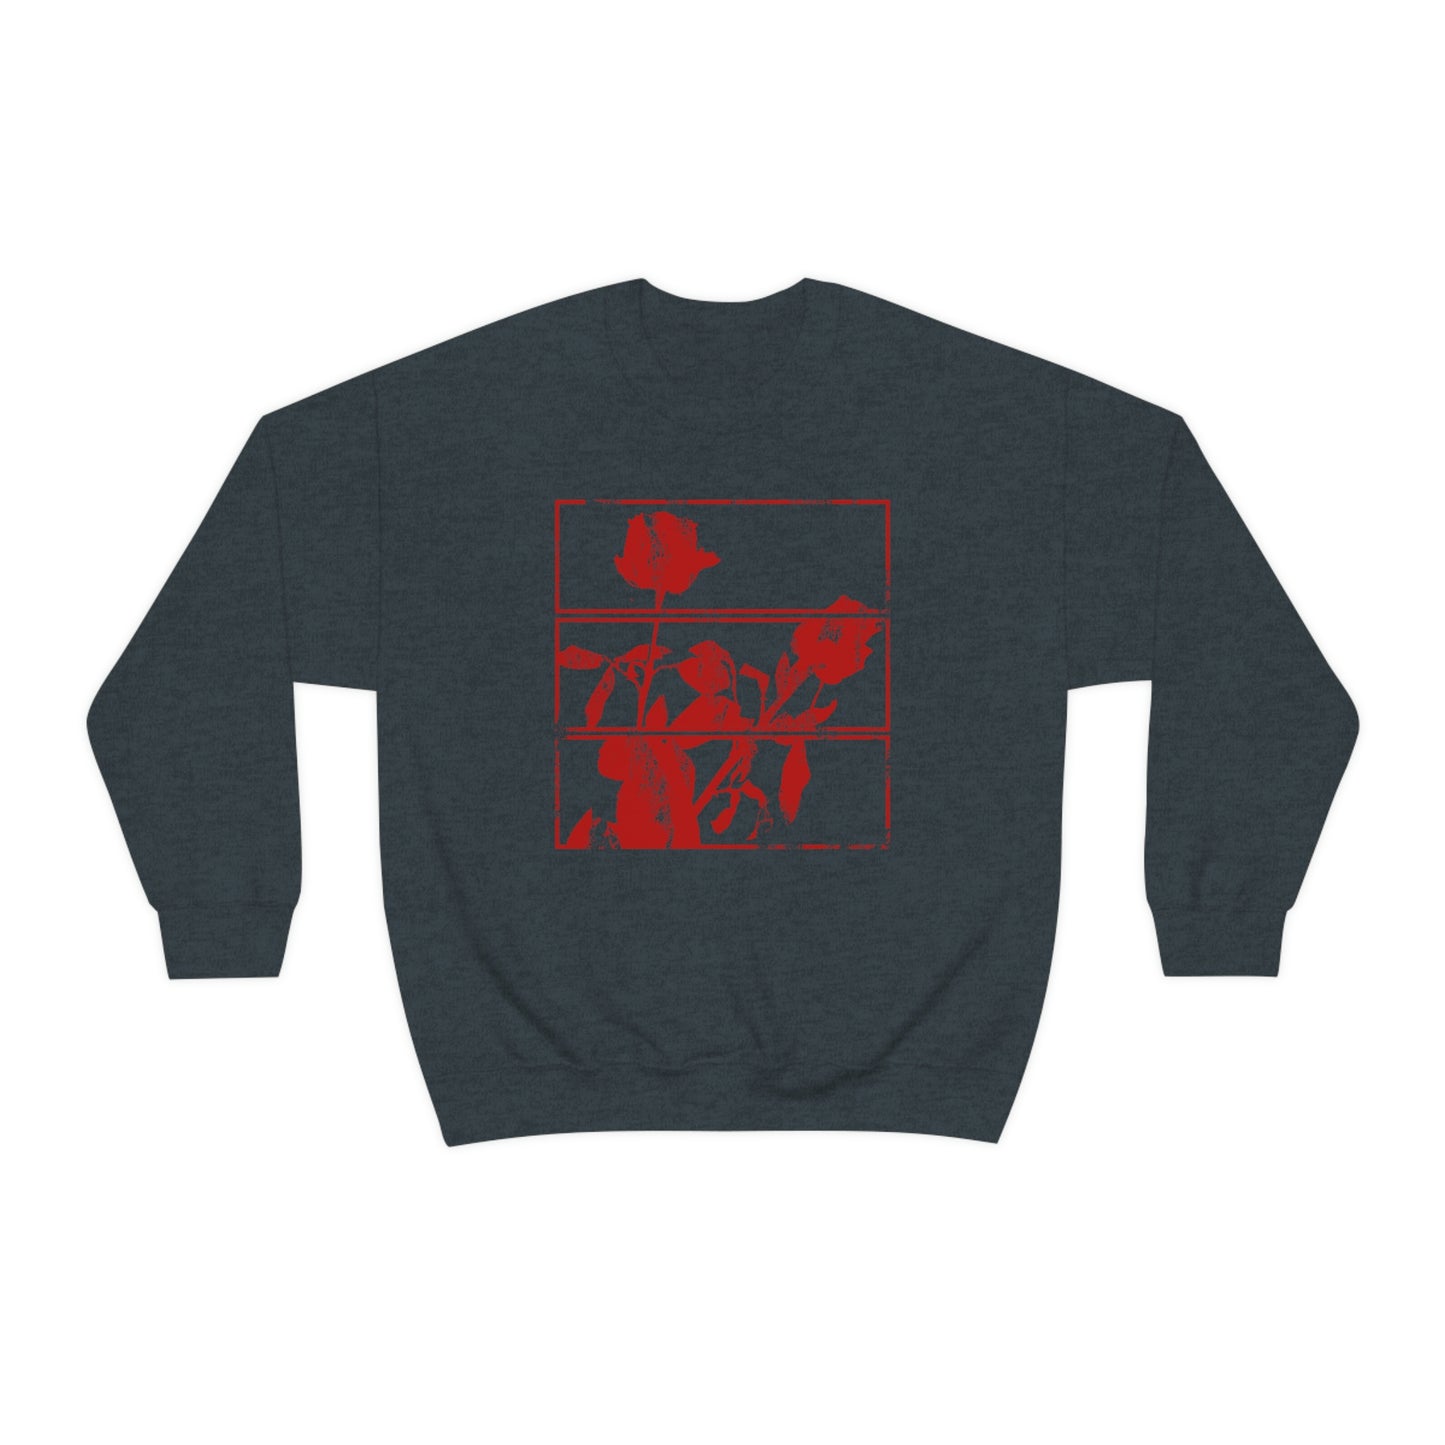 Red Roses sweatshirt Pastel Goth tee Gothic Soft Grunge Urban Streetwear Alternative Fashion japanese sweater Minimalist Street Wear Japan